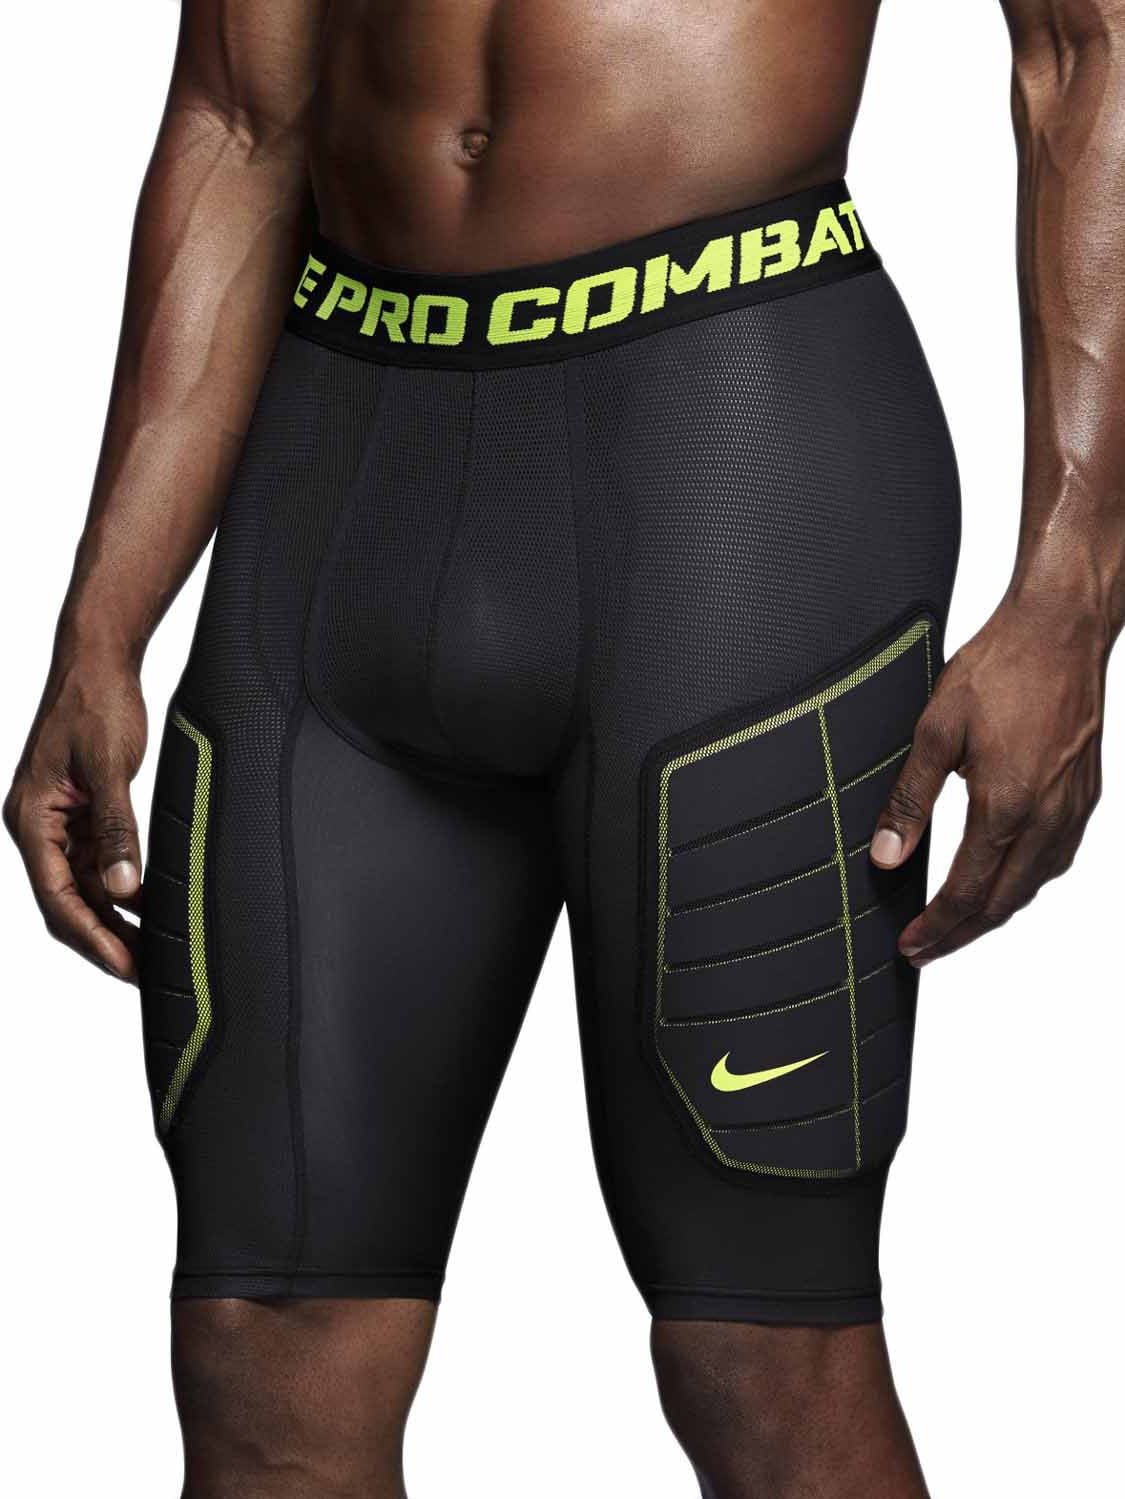 Arquitectura contacto Patatas Nike Pro Combat Mens Hyperstrong Compression Elite Basketball Shorts  Black/Volt - Walmart.com